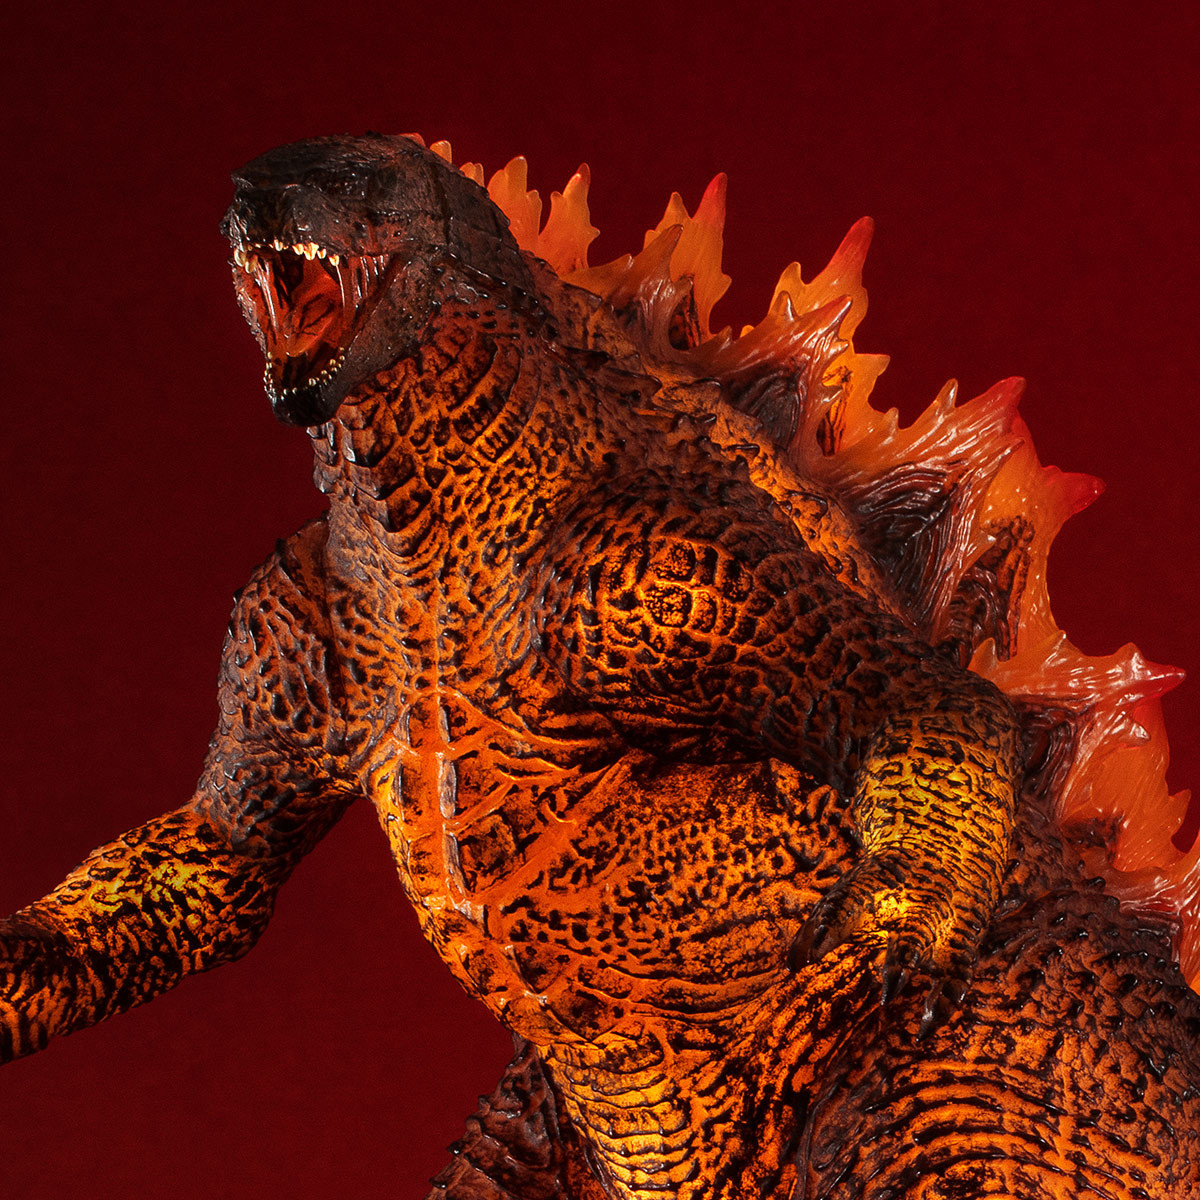 UA Monsters Godzilla Ⅱ Burning Godzilla 2019.